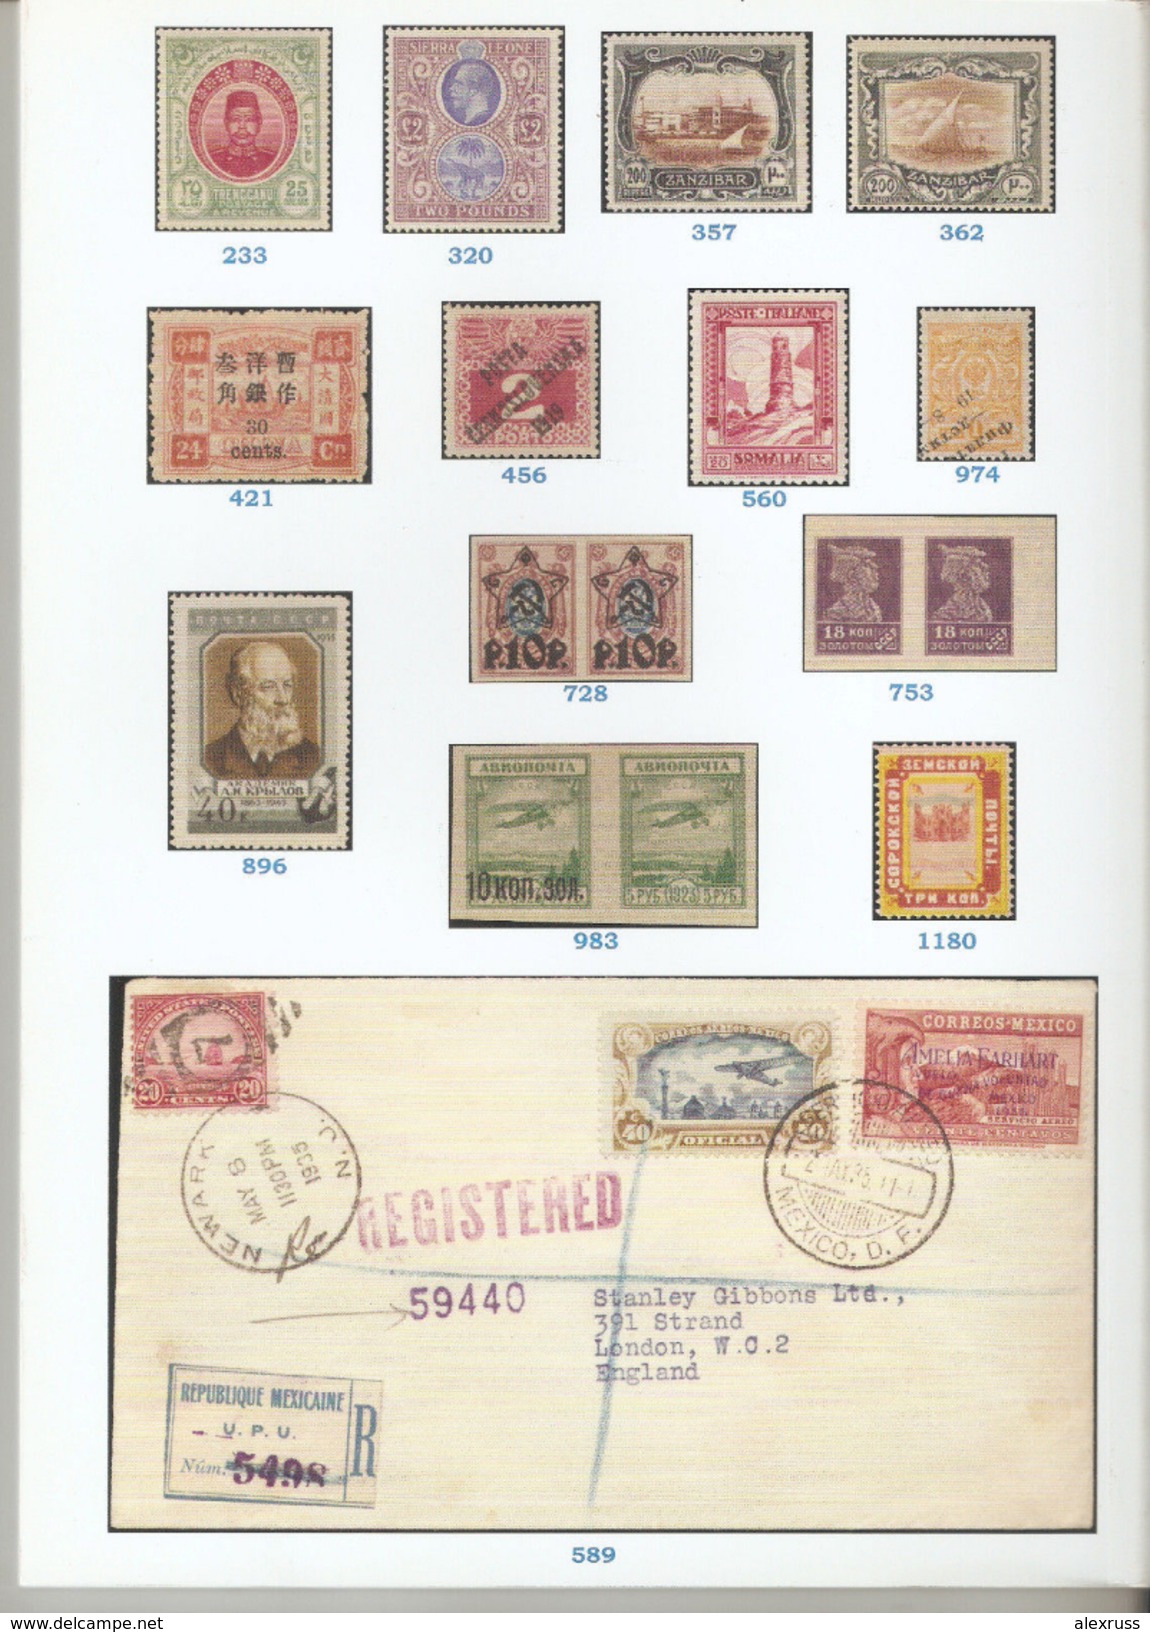 Raritan Stamps Auction 64,Mar 2015 Catalog Of Rare Russia Stamps,Errors & Worldwide Rarities - Cataloghi Di Case D'aste